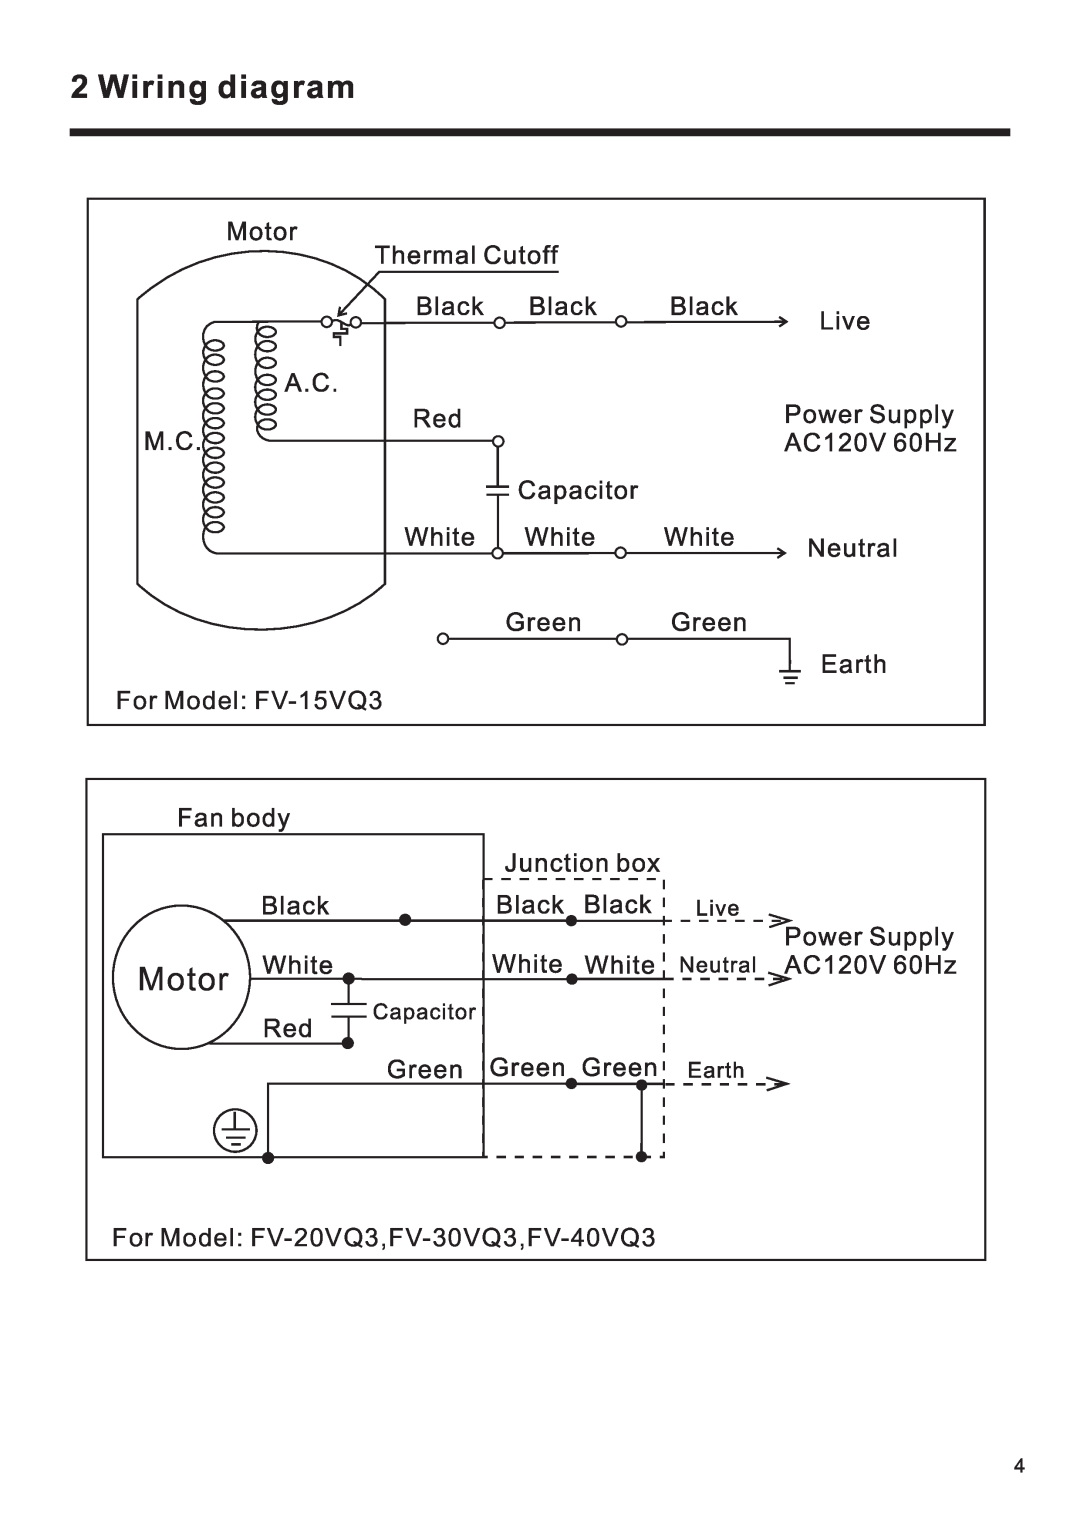 Panasonic FV-20/30/40VQ3 service manual Wiring diagram, Motor, For Model FV-15VQ3, For Model FV-20VQ3,FV-30VQ3,FV-40VQ3 